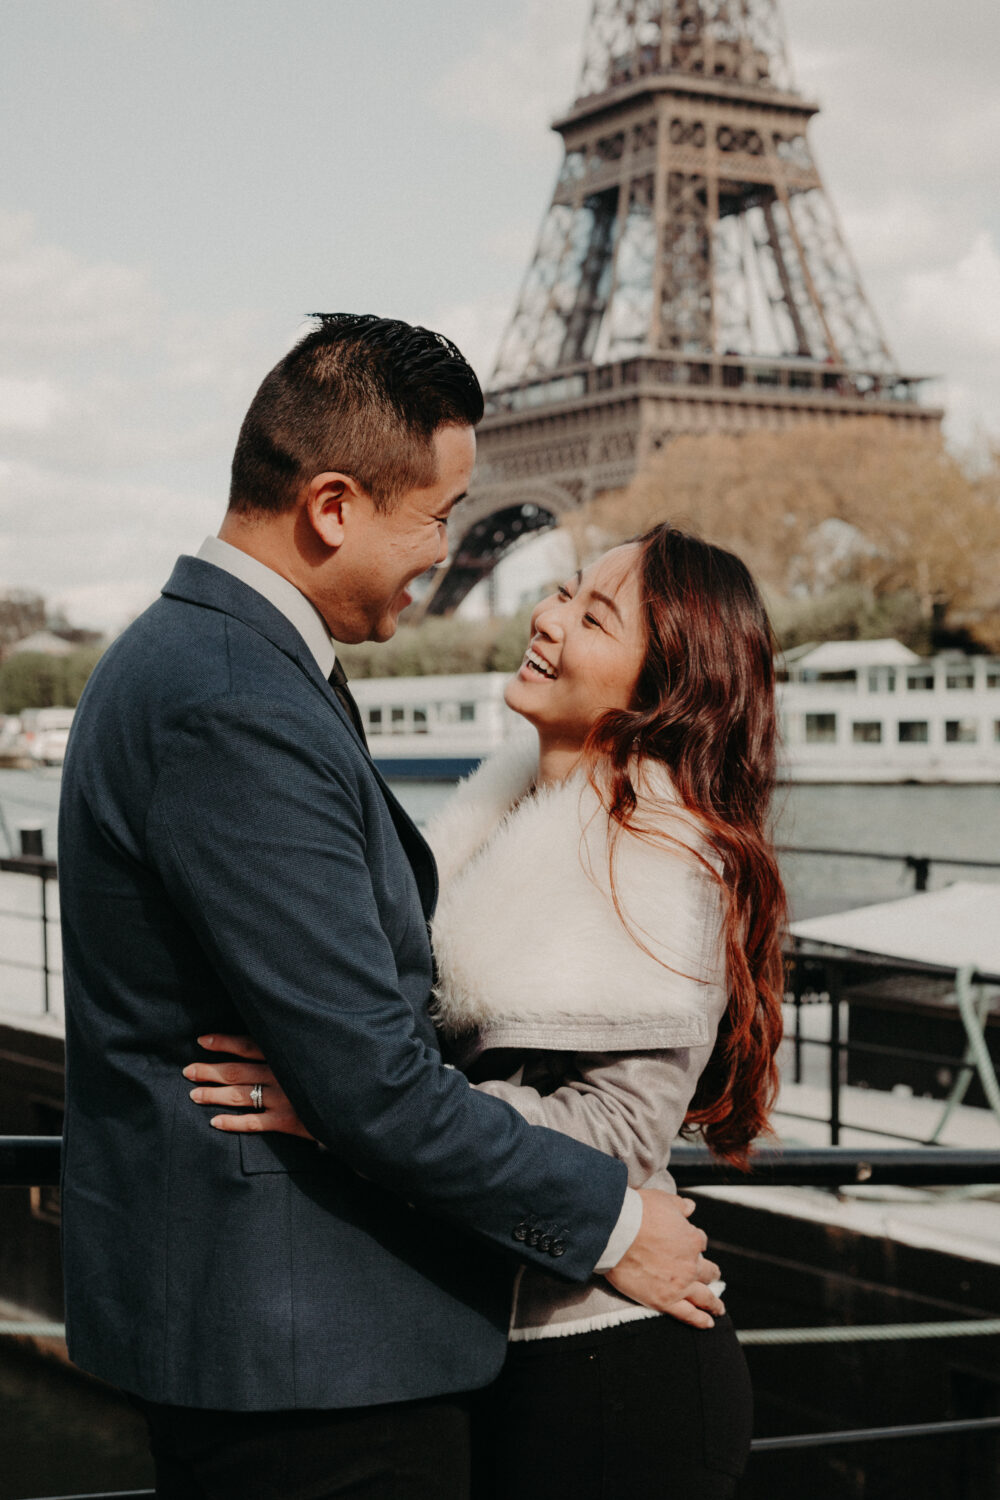 Eiffel Tower Surprise proposal photoshoot - Samuel & Erica